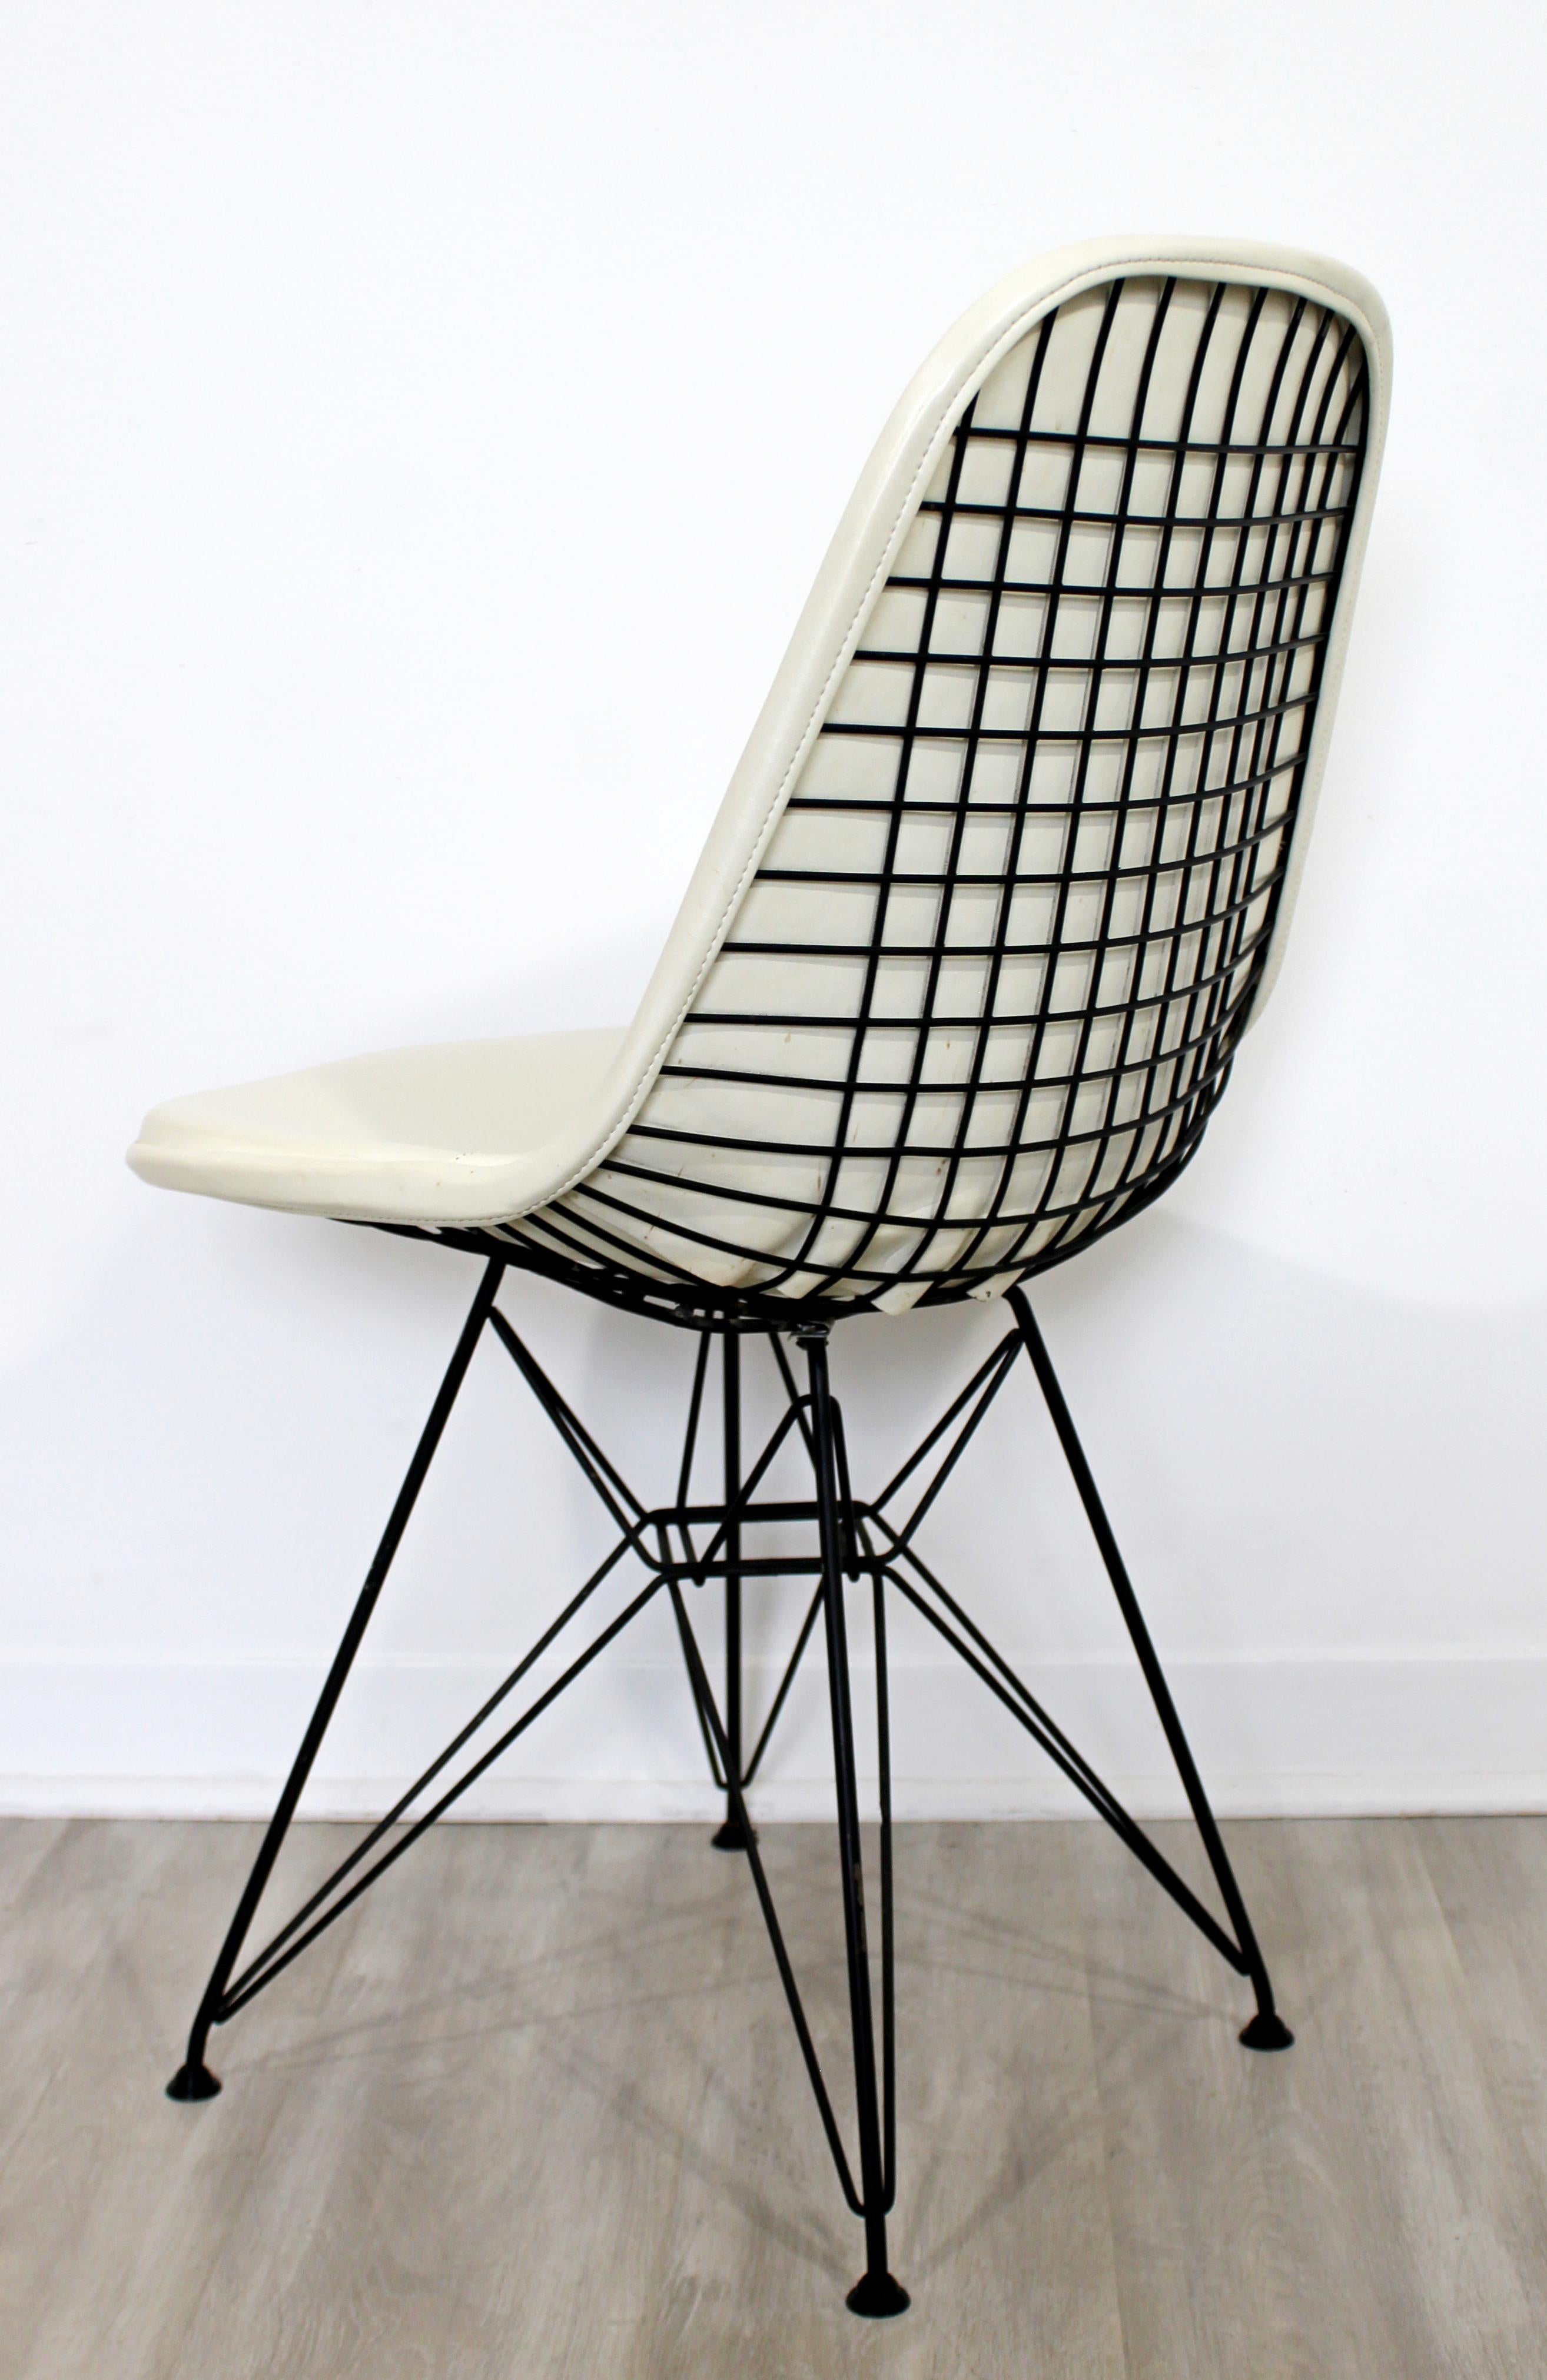 American Mid-Century Modern Eames Herman Miller Eiffel Tower Leather DKR Side Chair 1960s